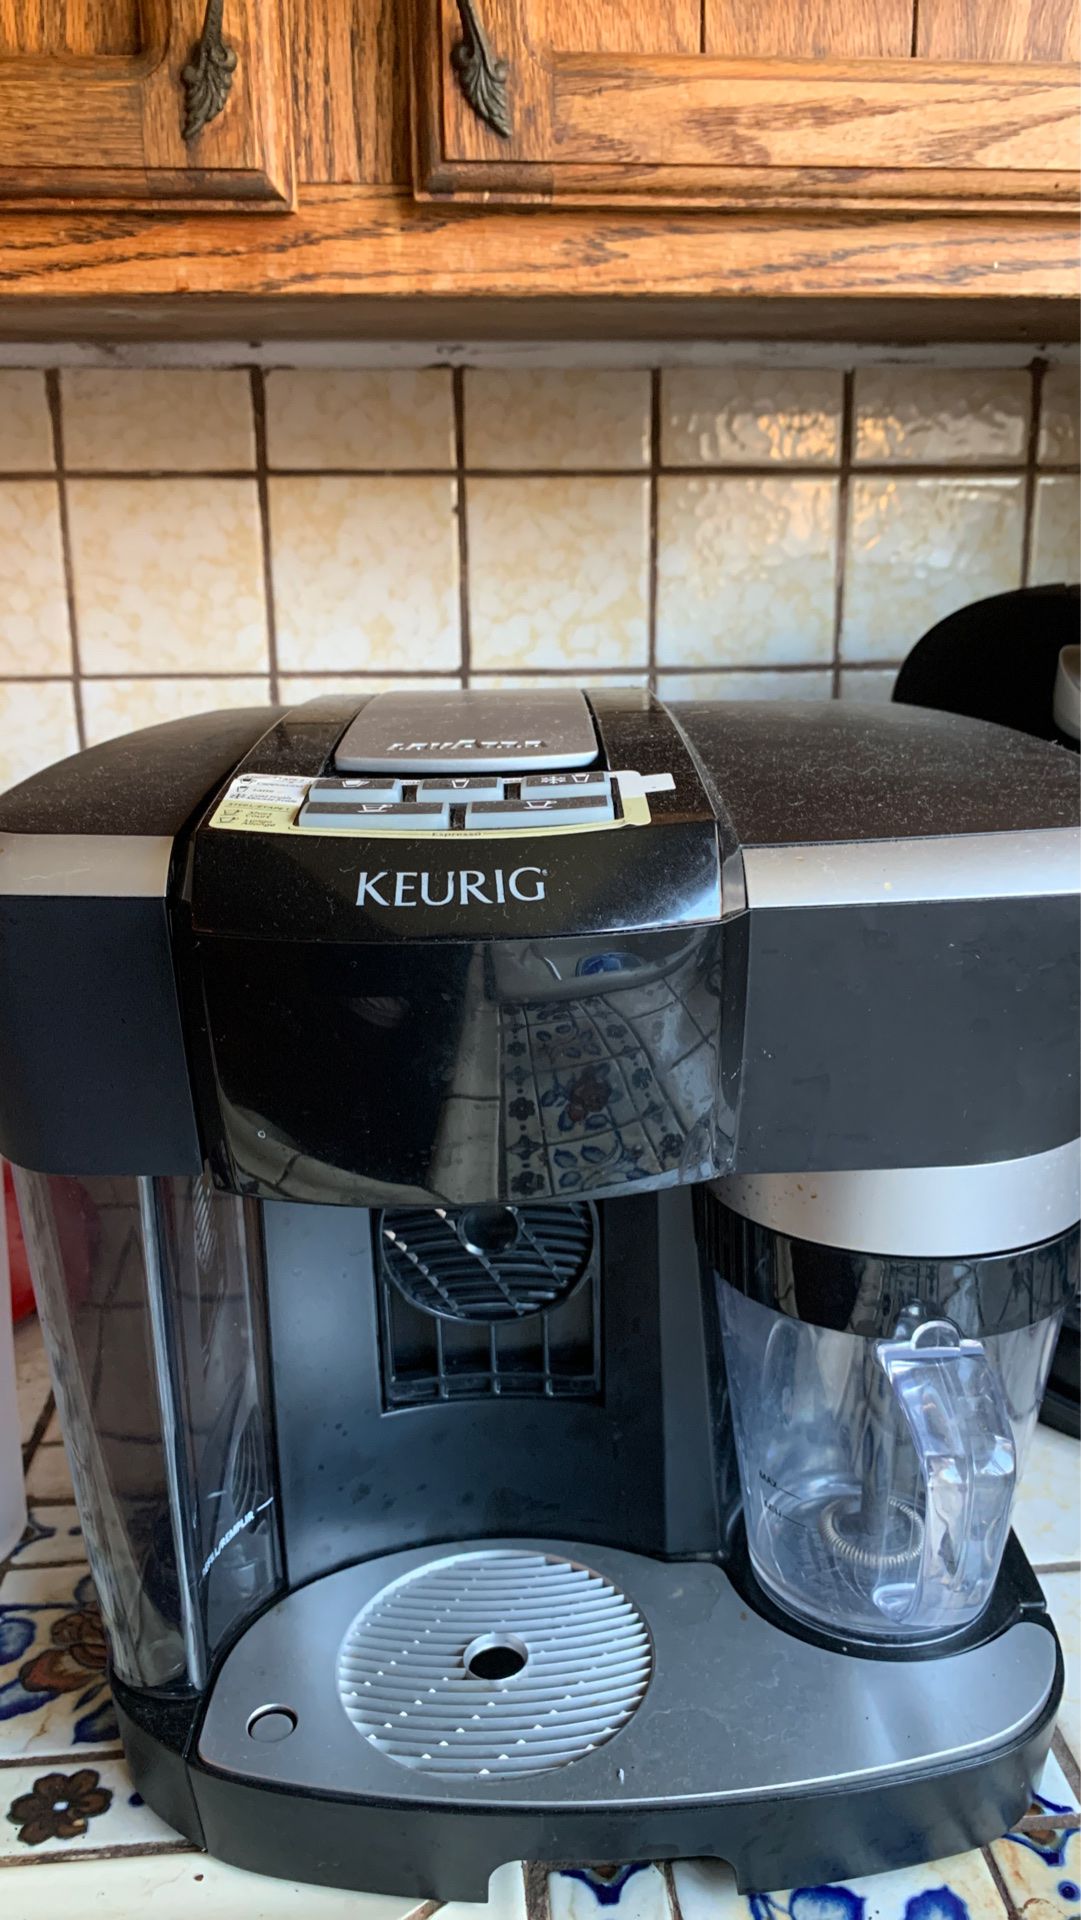 Keurig cappuccino and latte maker